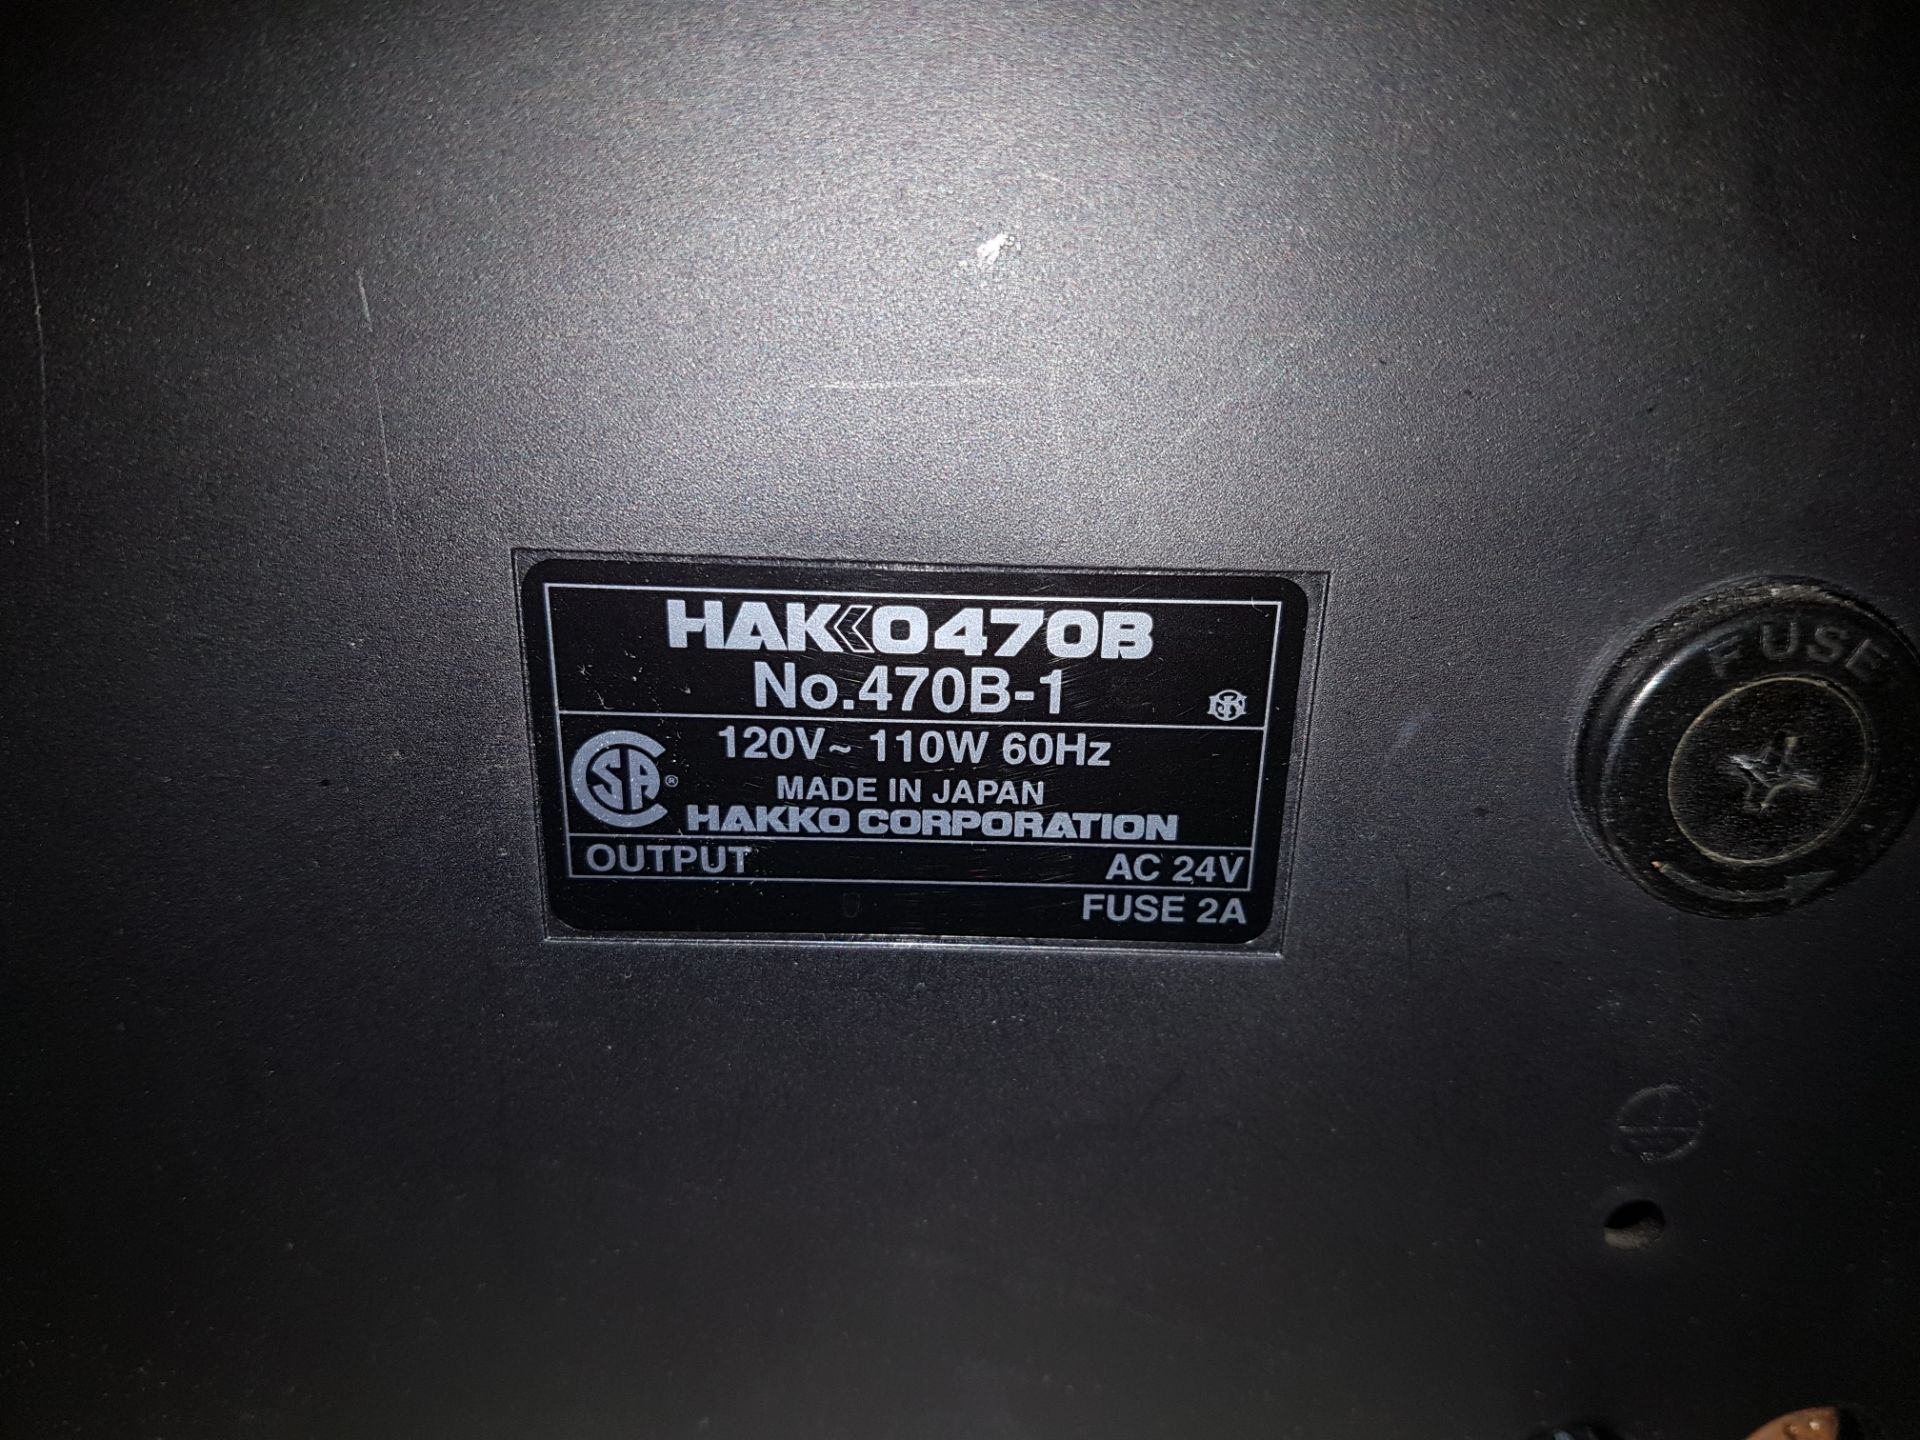 Hakko "470B" Desoldering Tool - Image 3 of 3